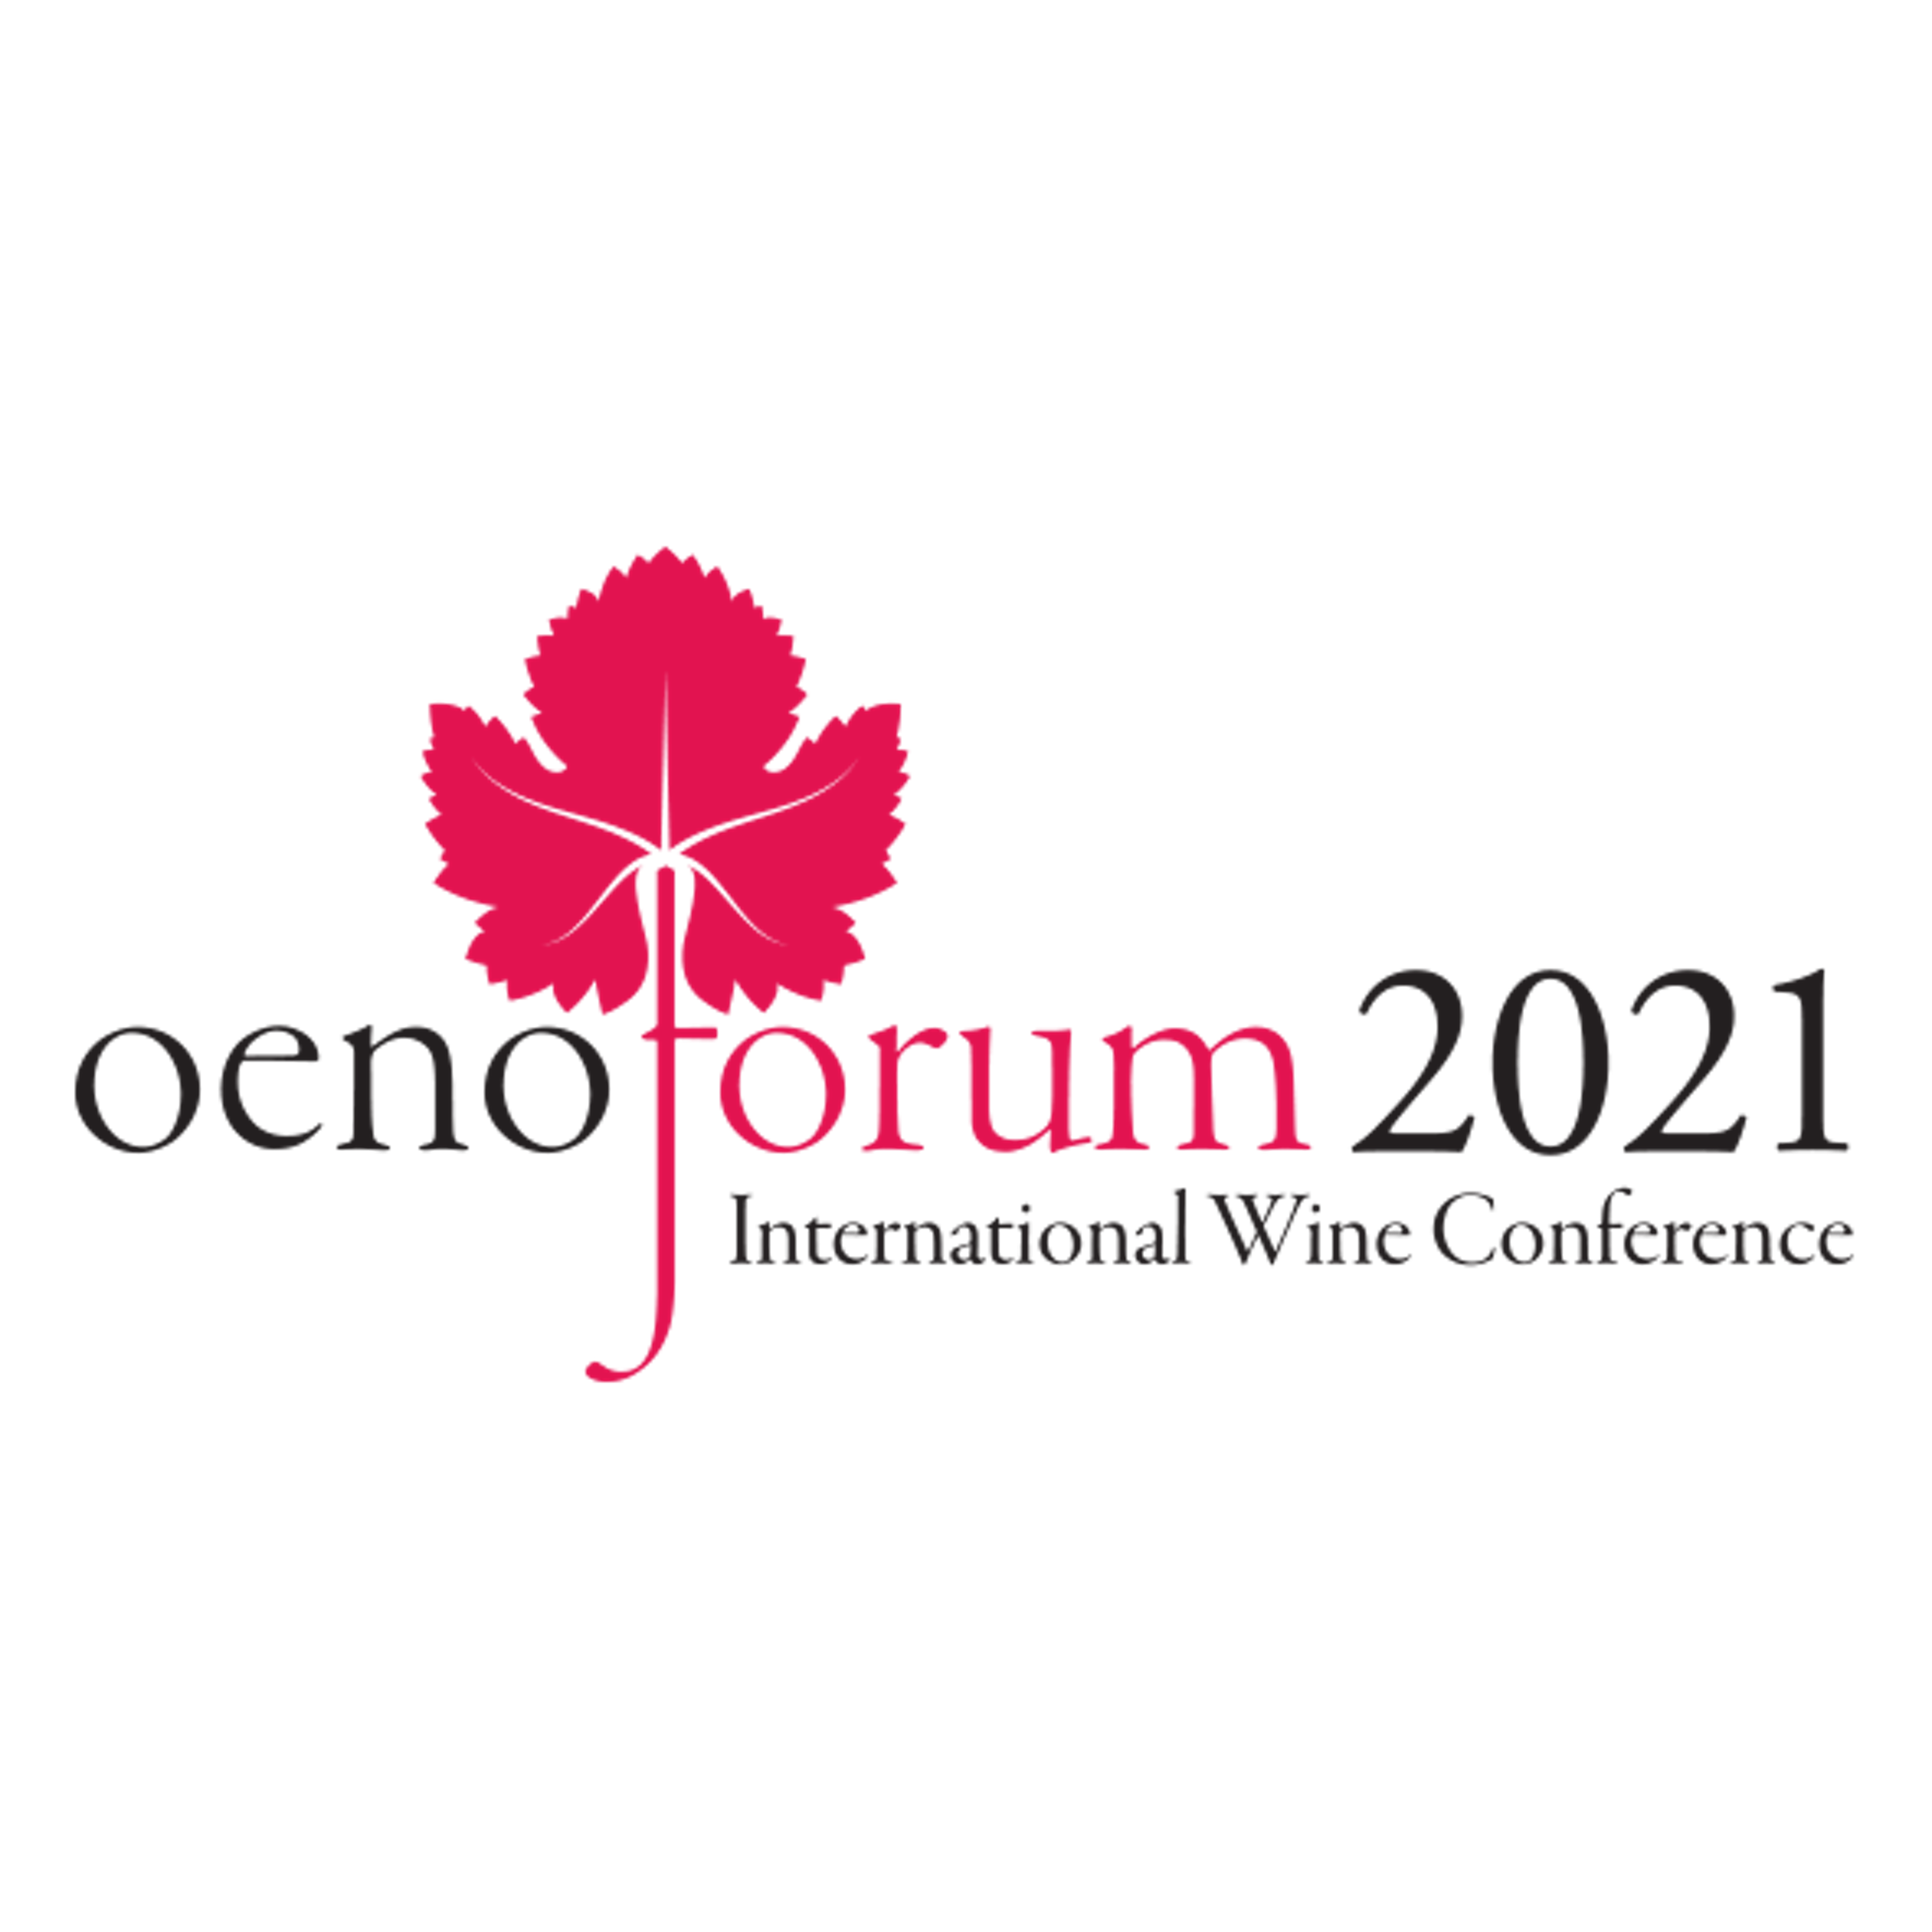 oenoforum 2021 logo